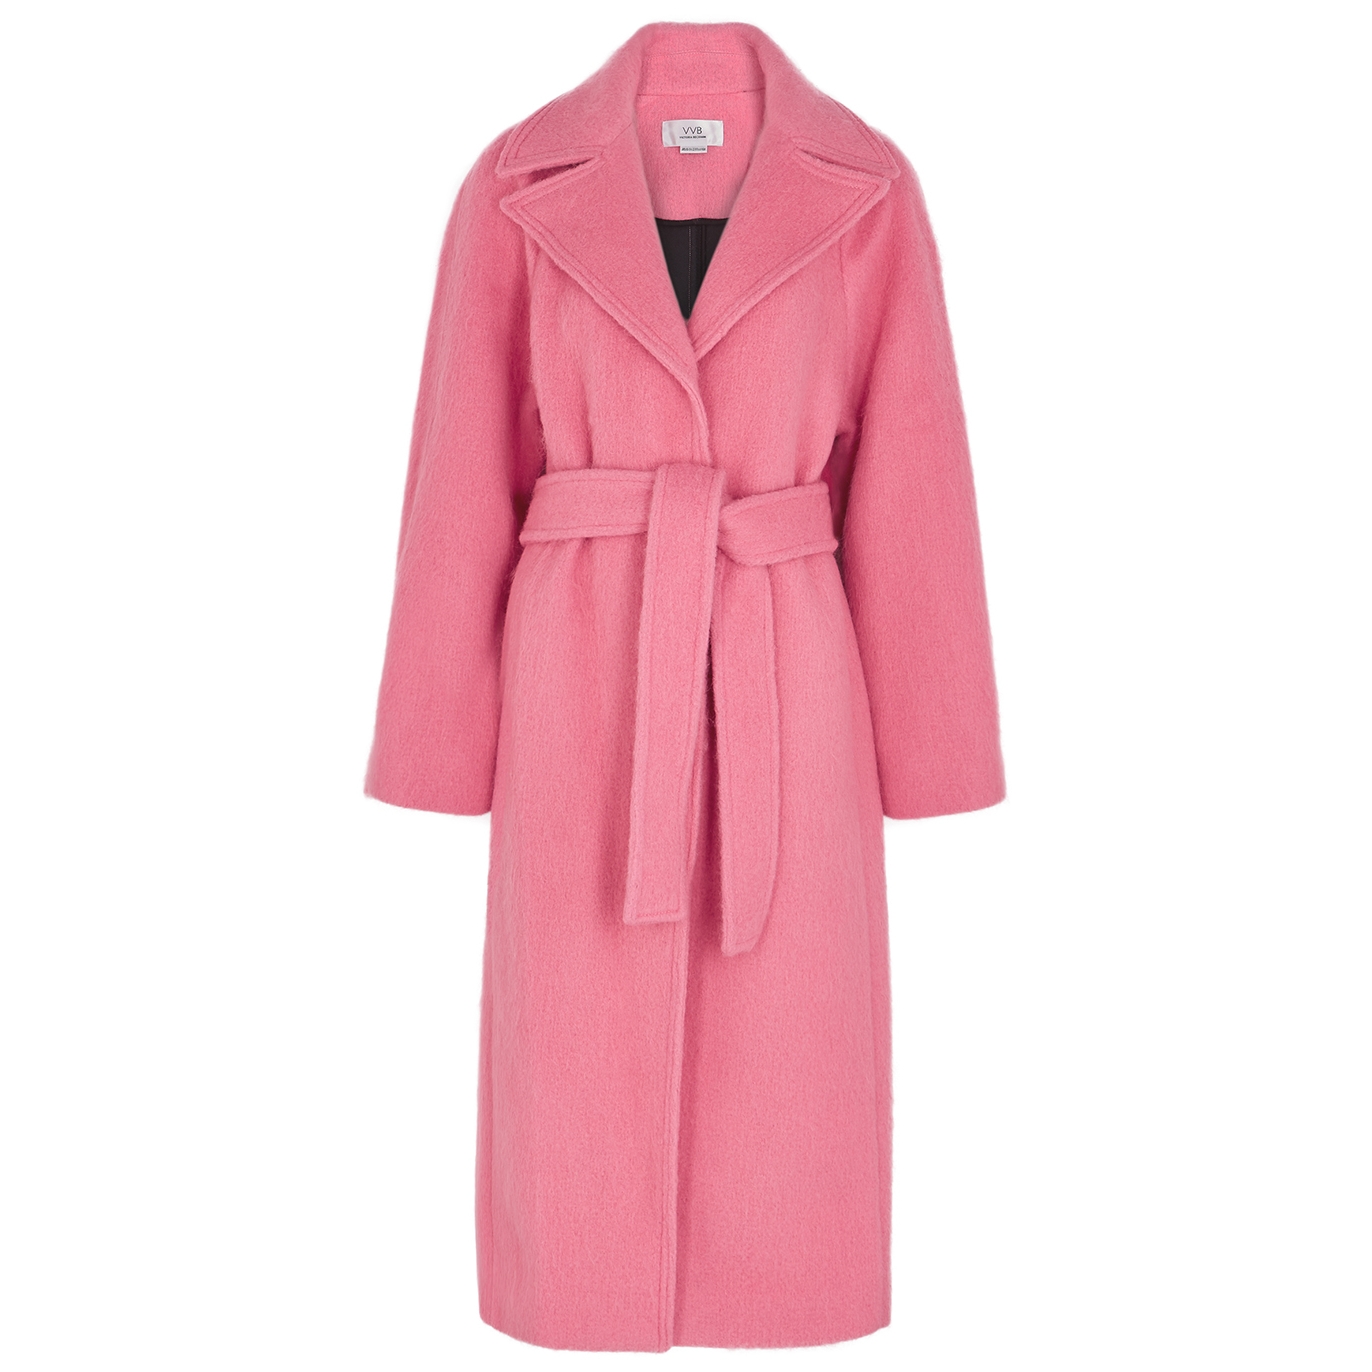 Victoria, Victoria Beckham Pink Brushed Wool-Blend Coat